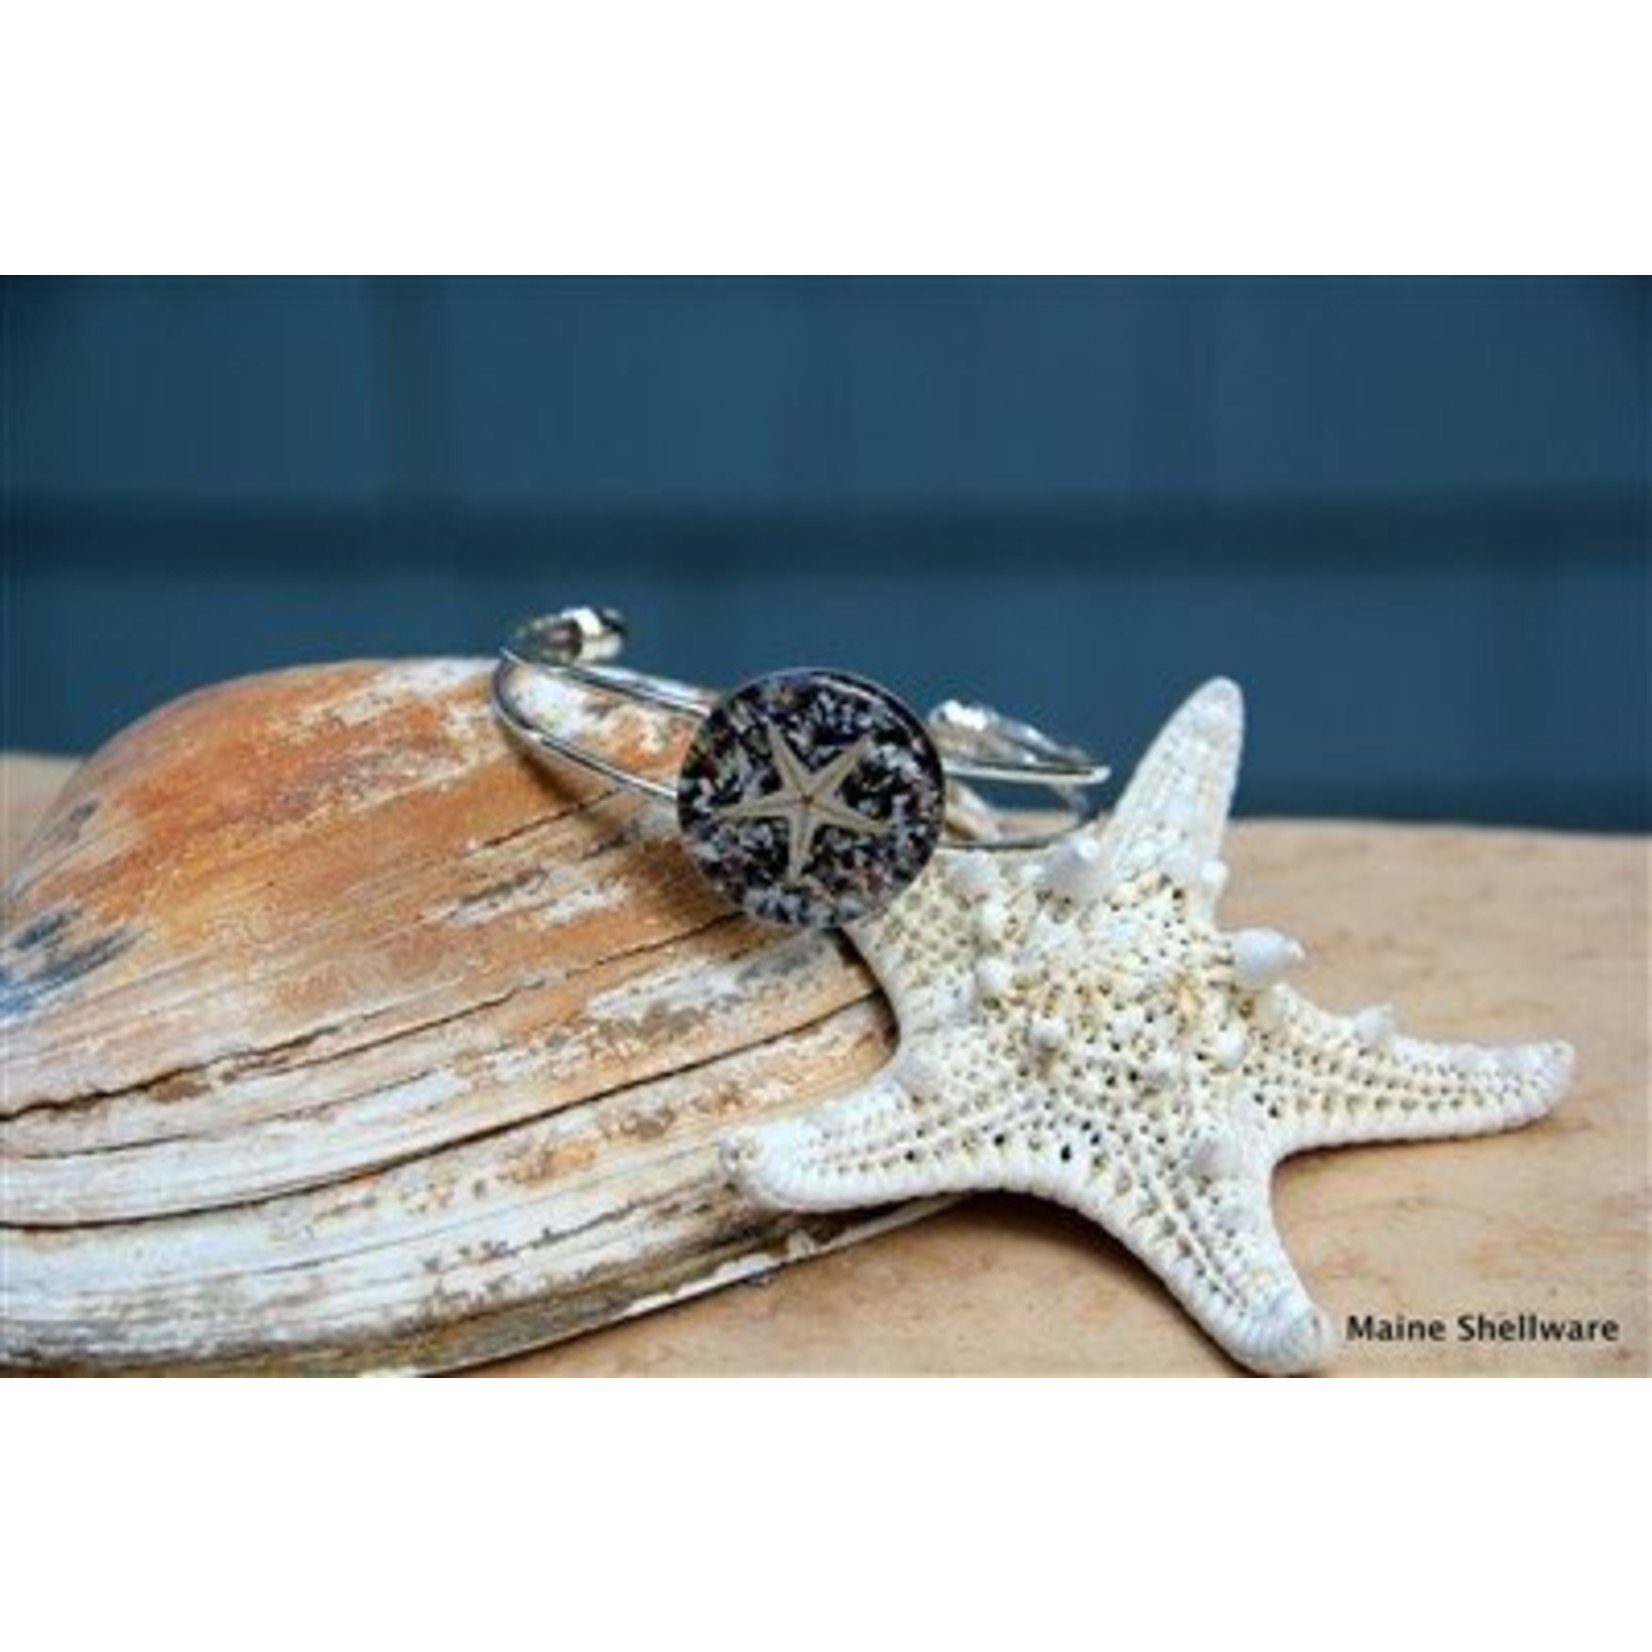 Maine Shellware Starfish Adjustable Bracelet - Silver Cuff